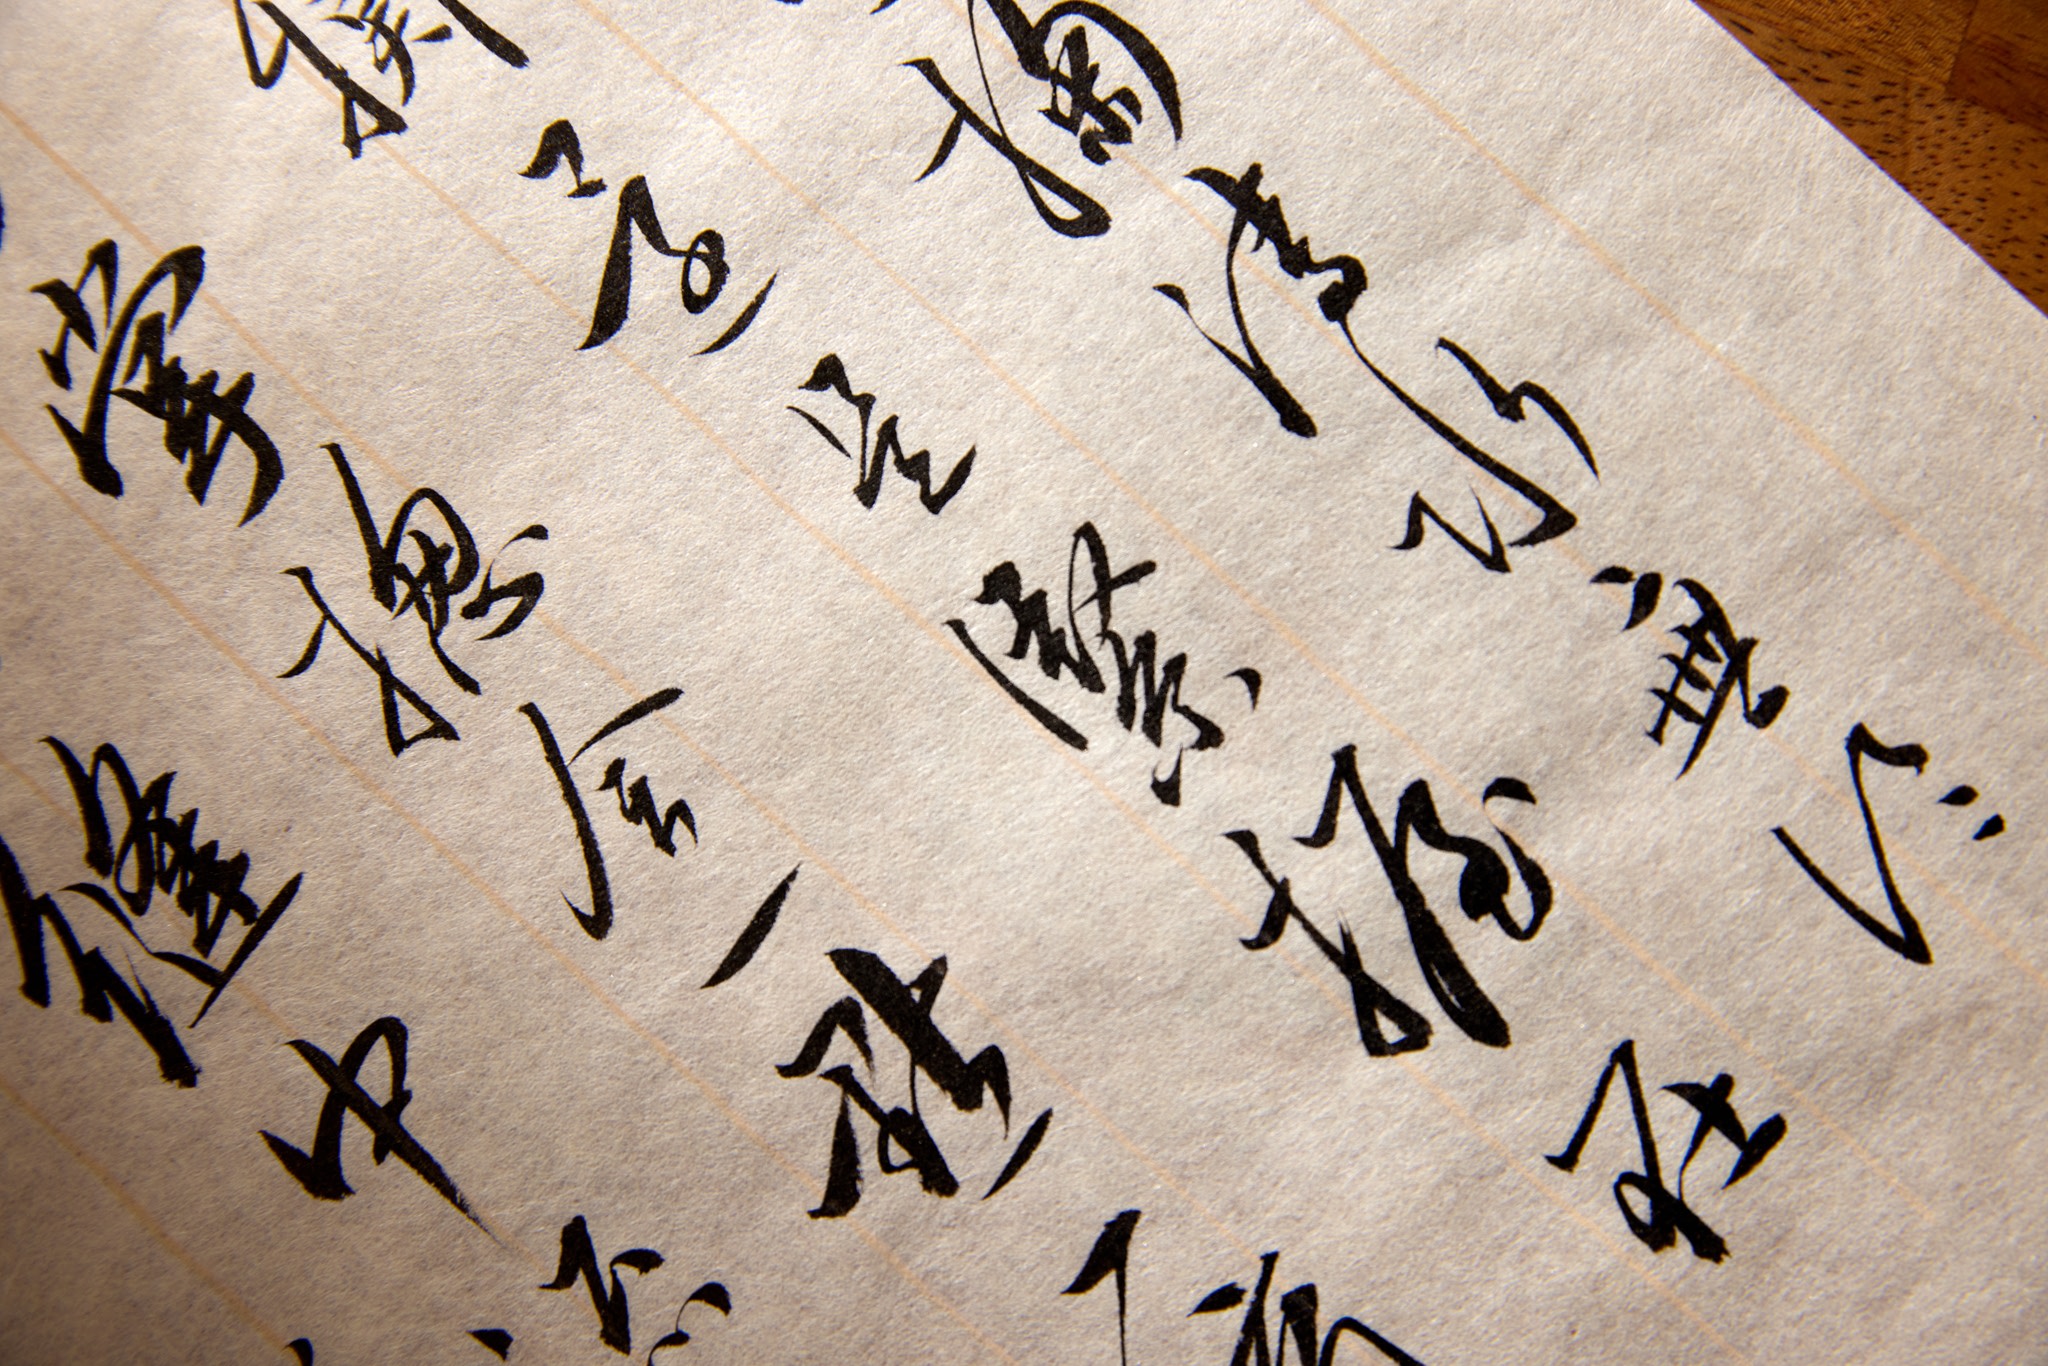 Elvis Mok’s calligraphy work in semi-cursive script